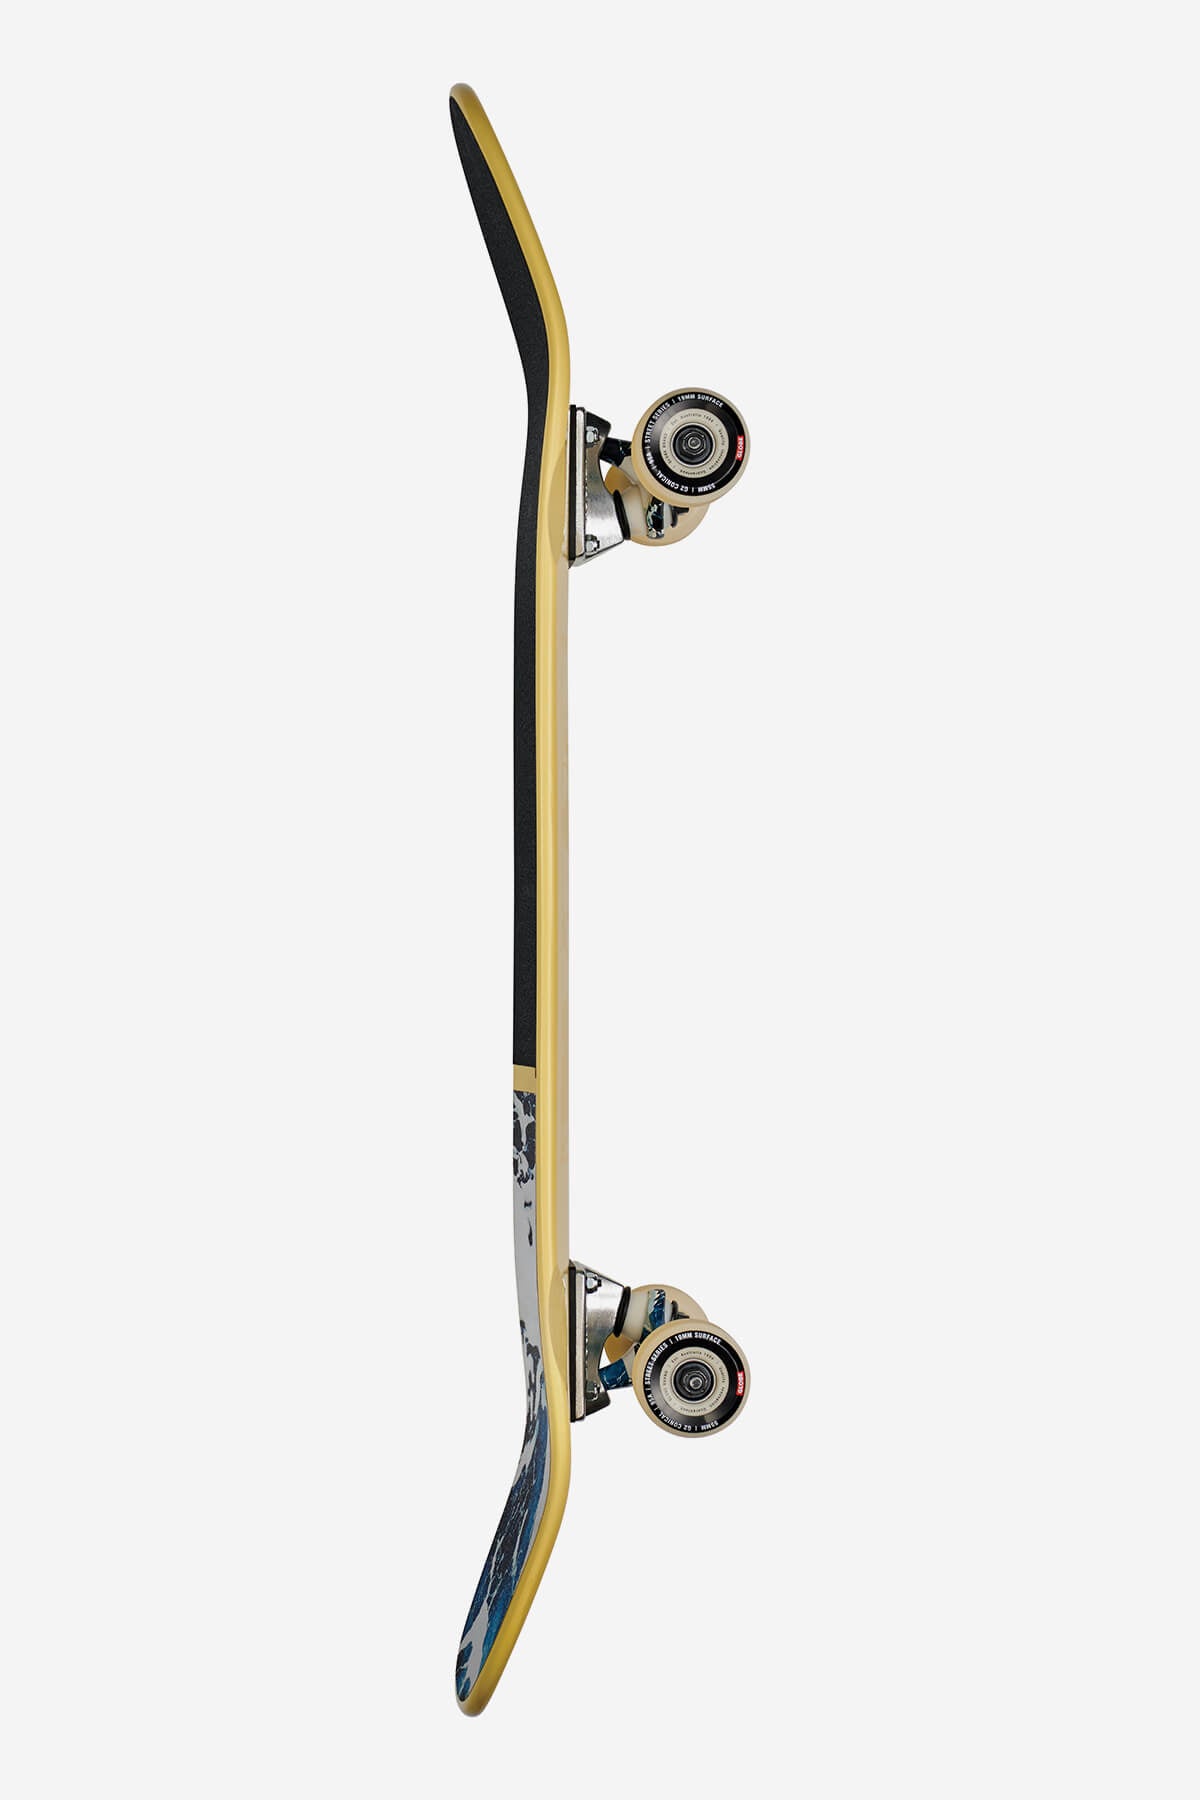 Globe Skateboard komplettiert Shooter - 8.625" komplett Skateboard in Yellow/ComeHell